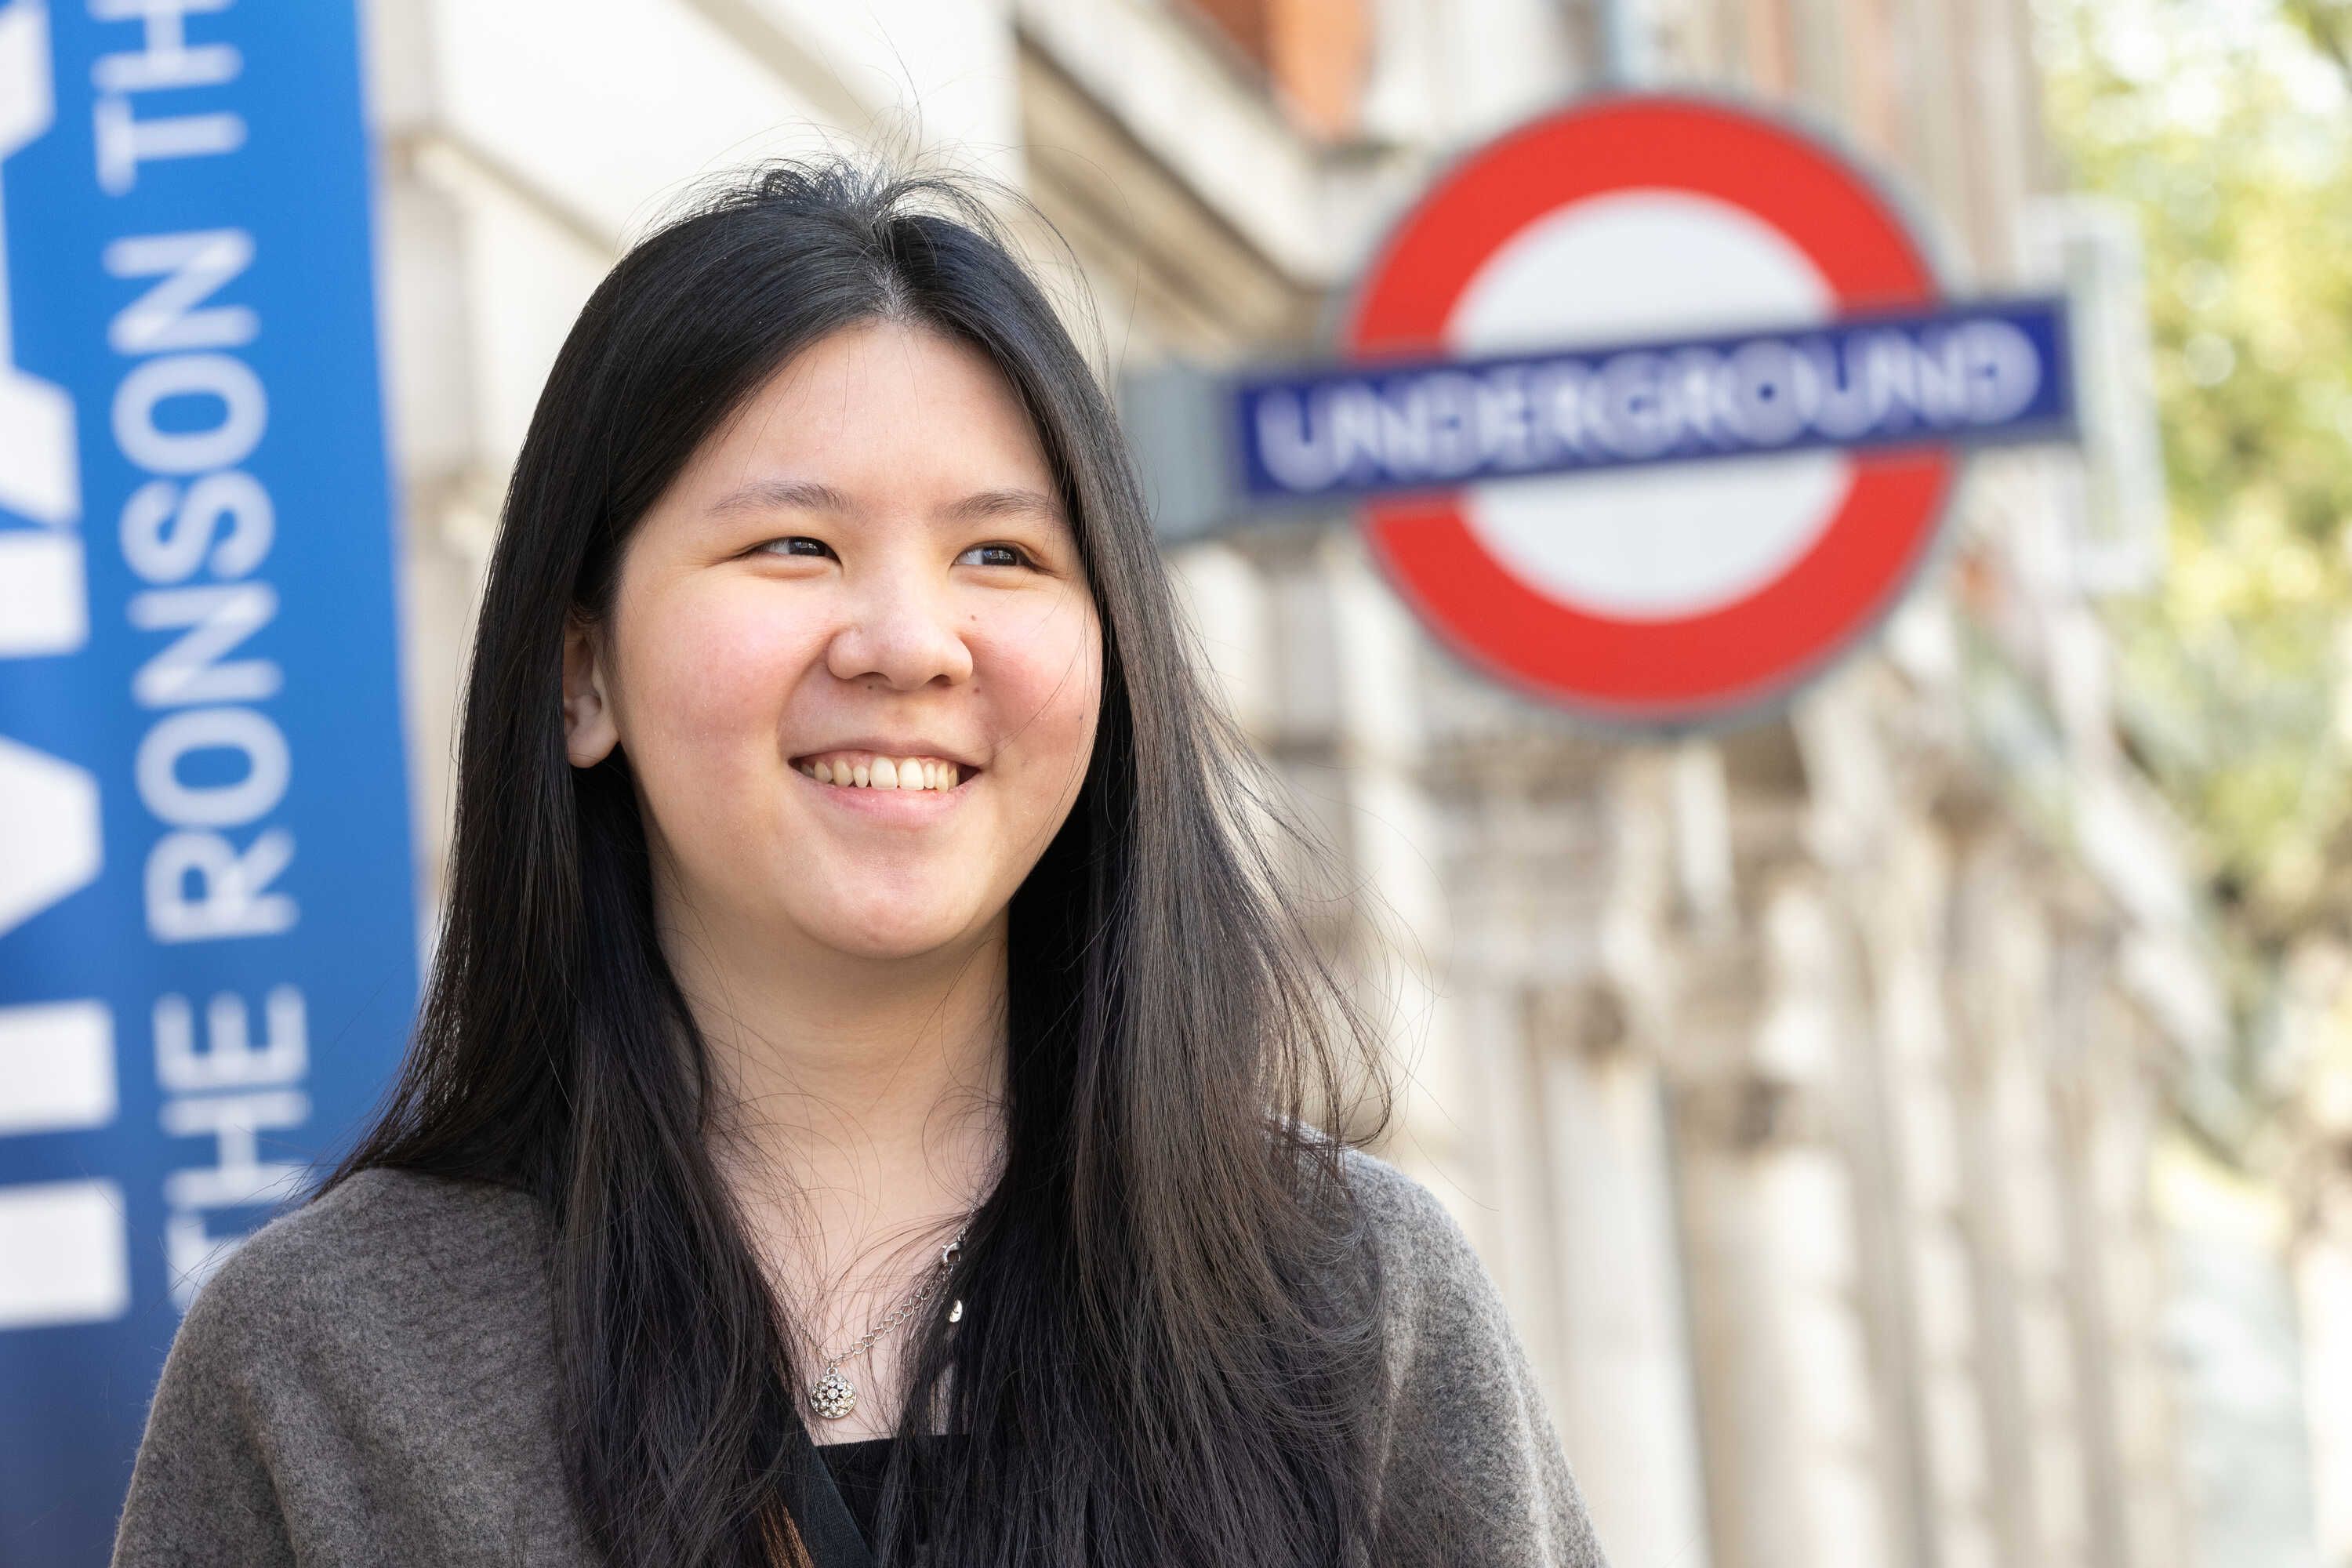 Student outside London underground station